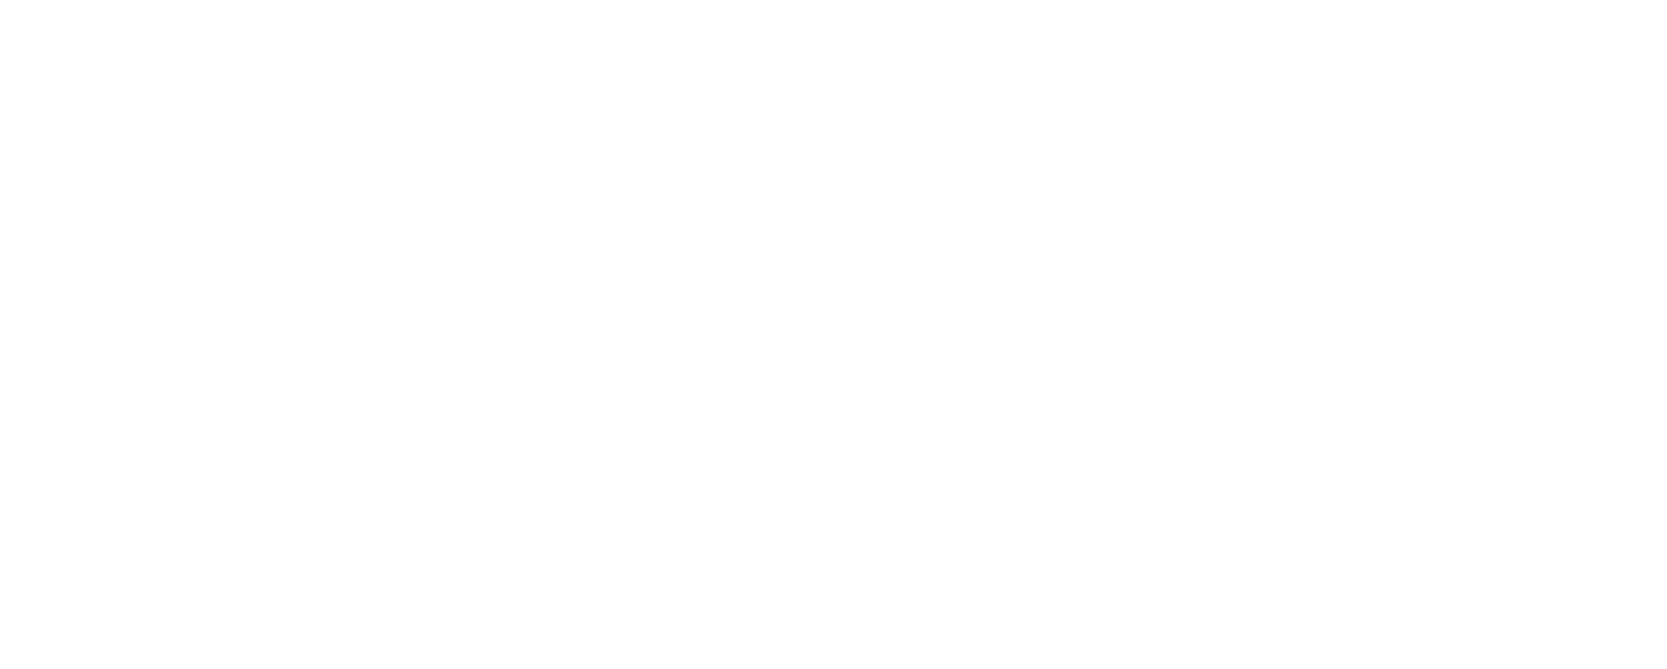 ciclo_logo